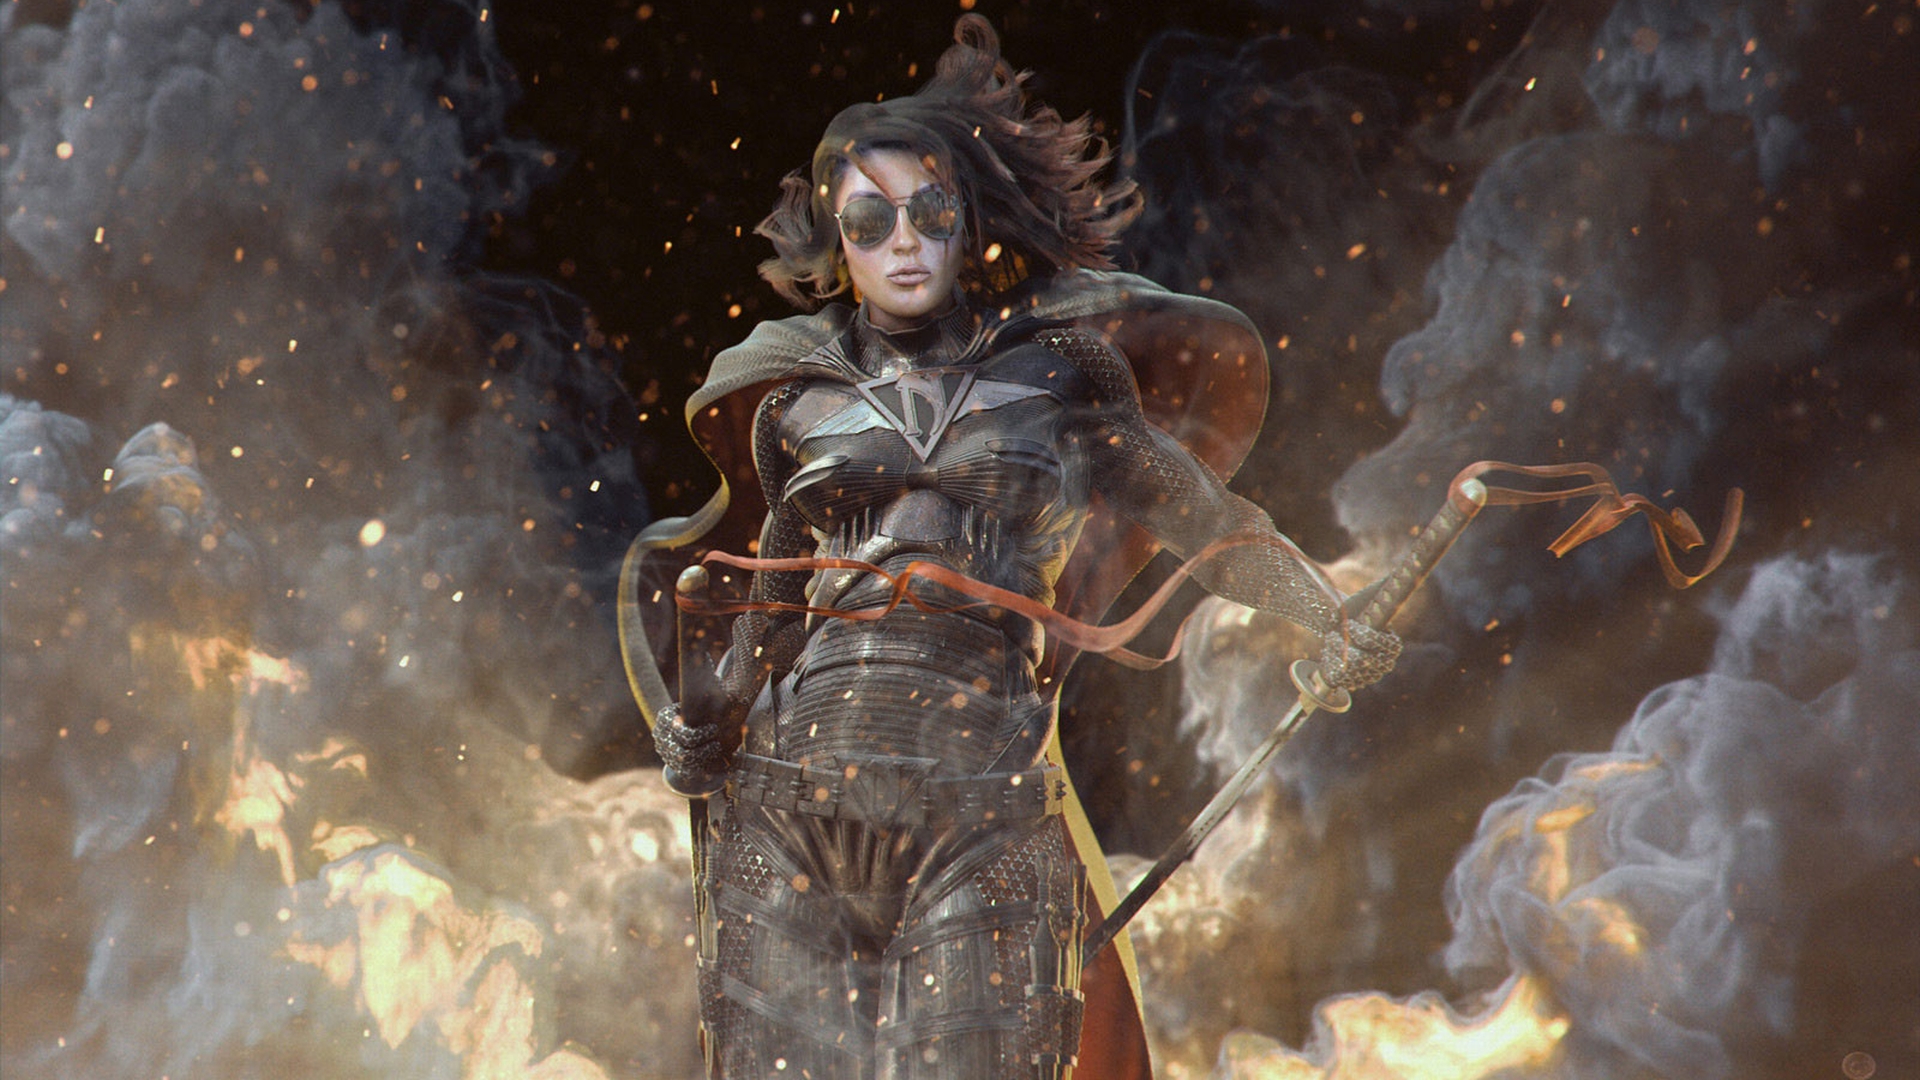 Fantasy women warrior in captivating desktop wallpaper.